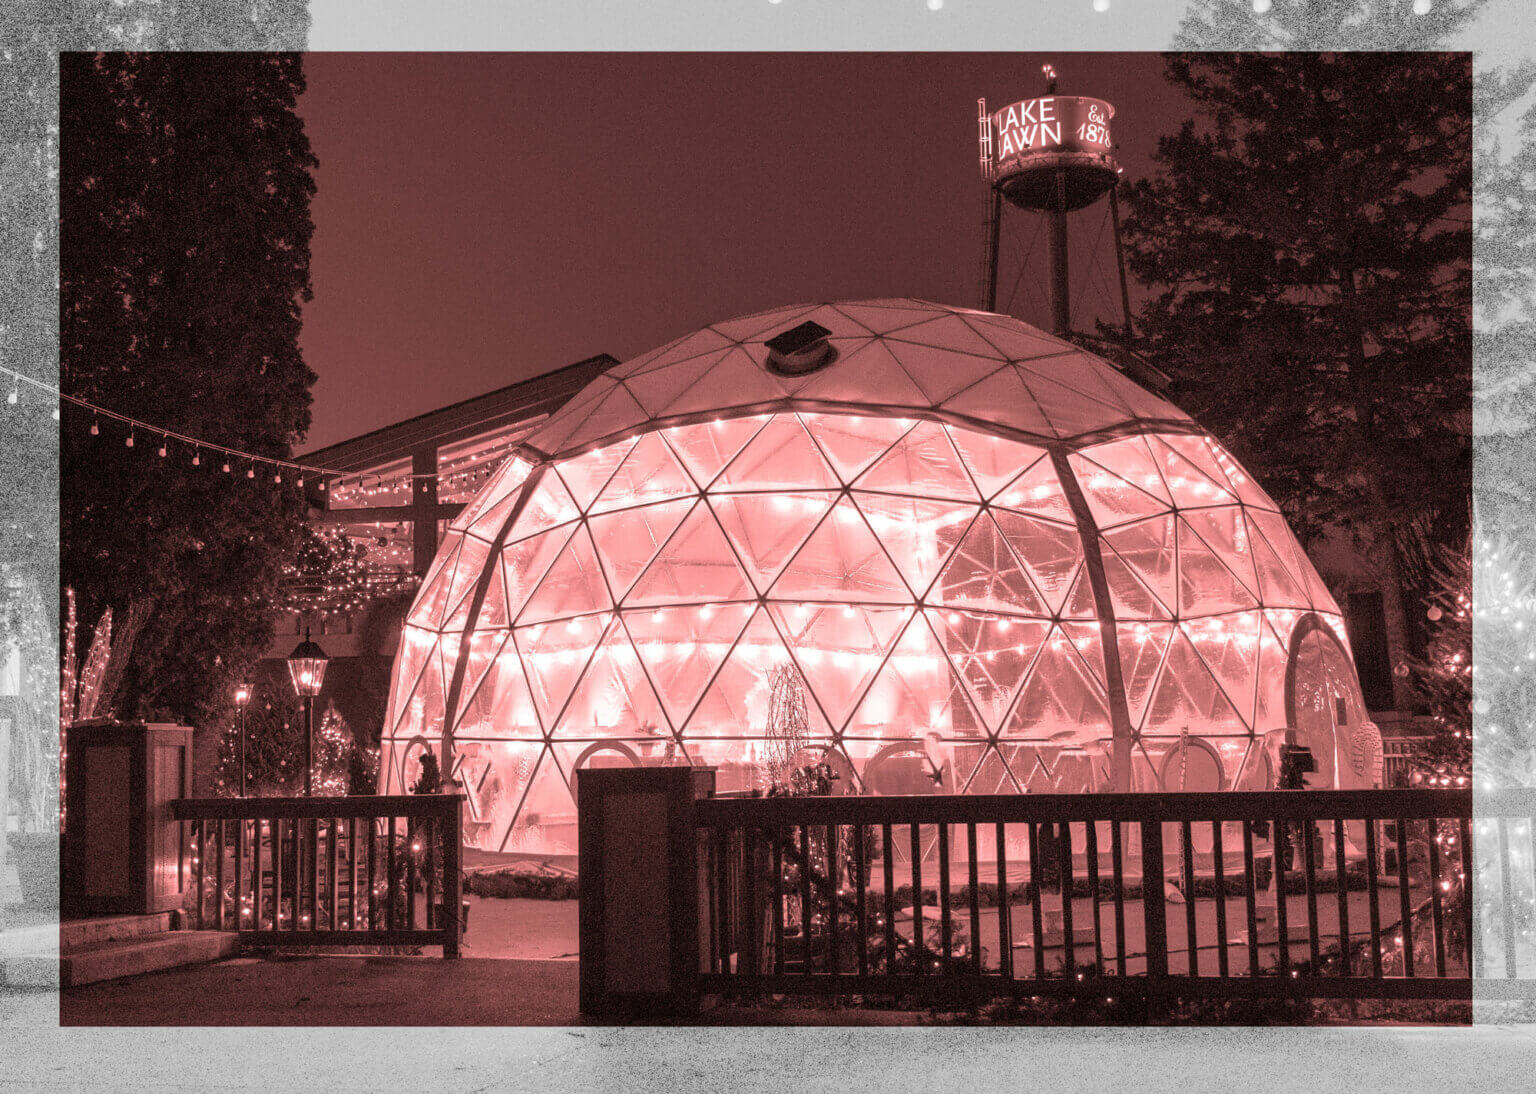 Big red igloo at Lake Lawn Resort.